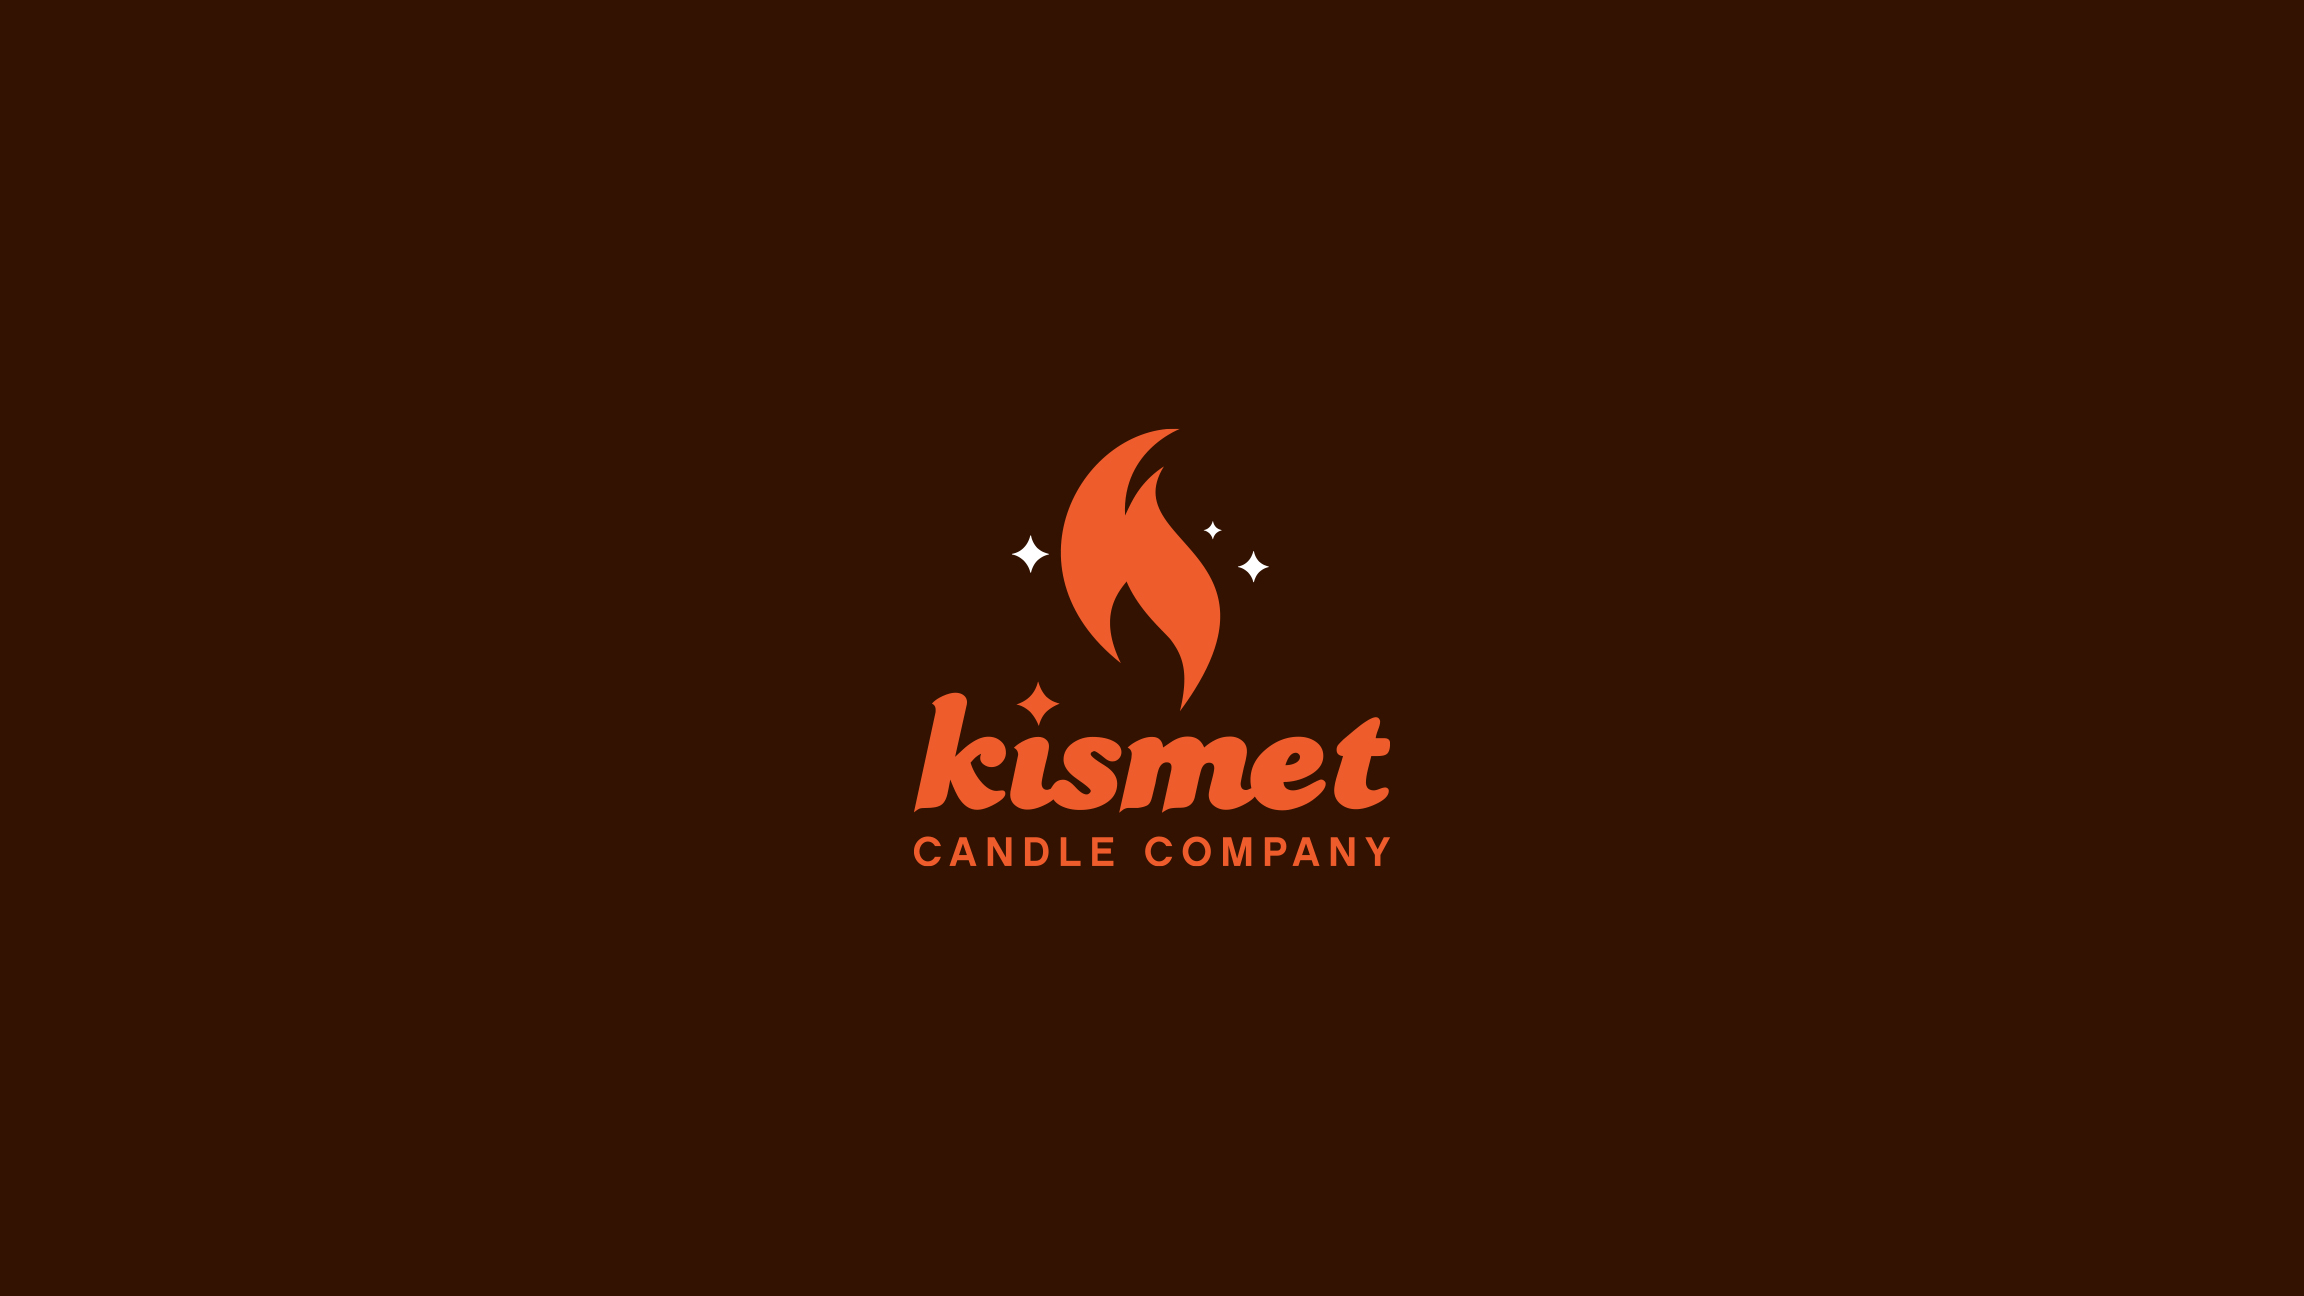 Kismet Candle Company Banner